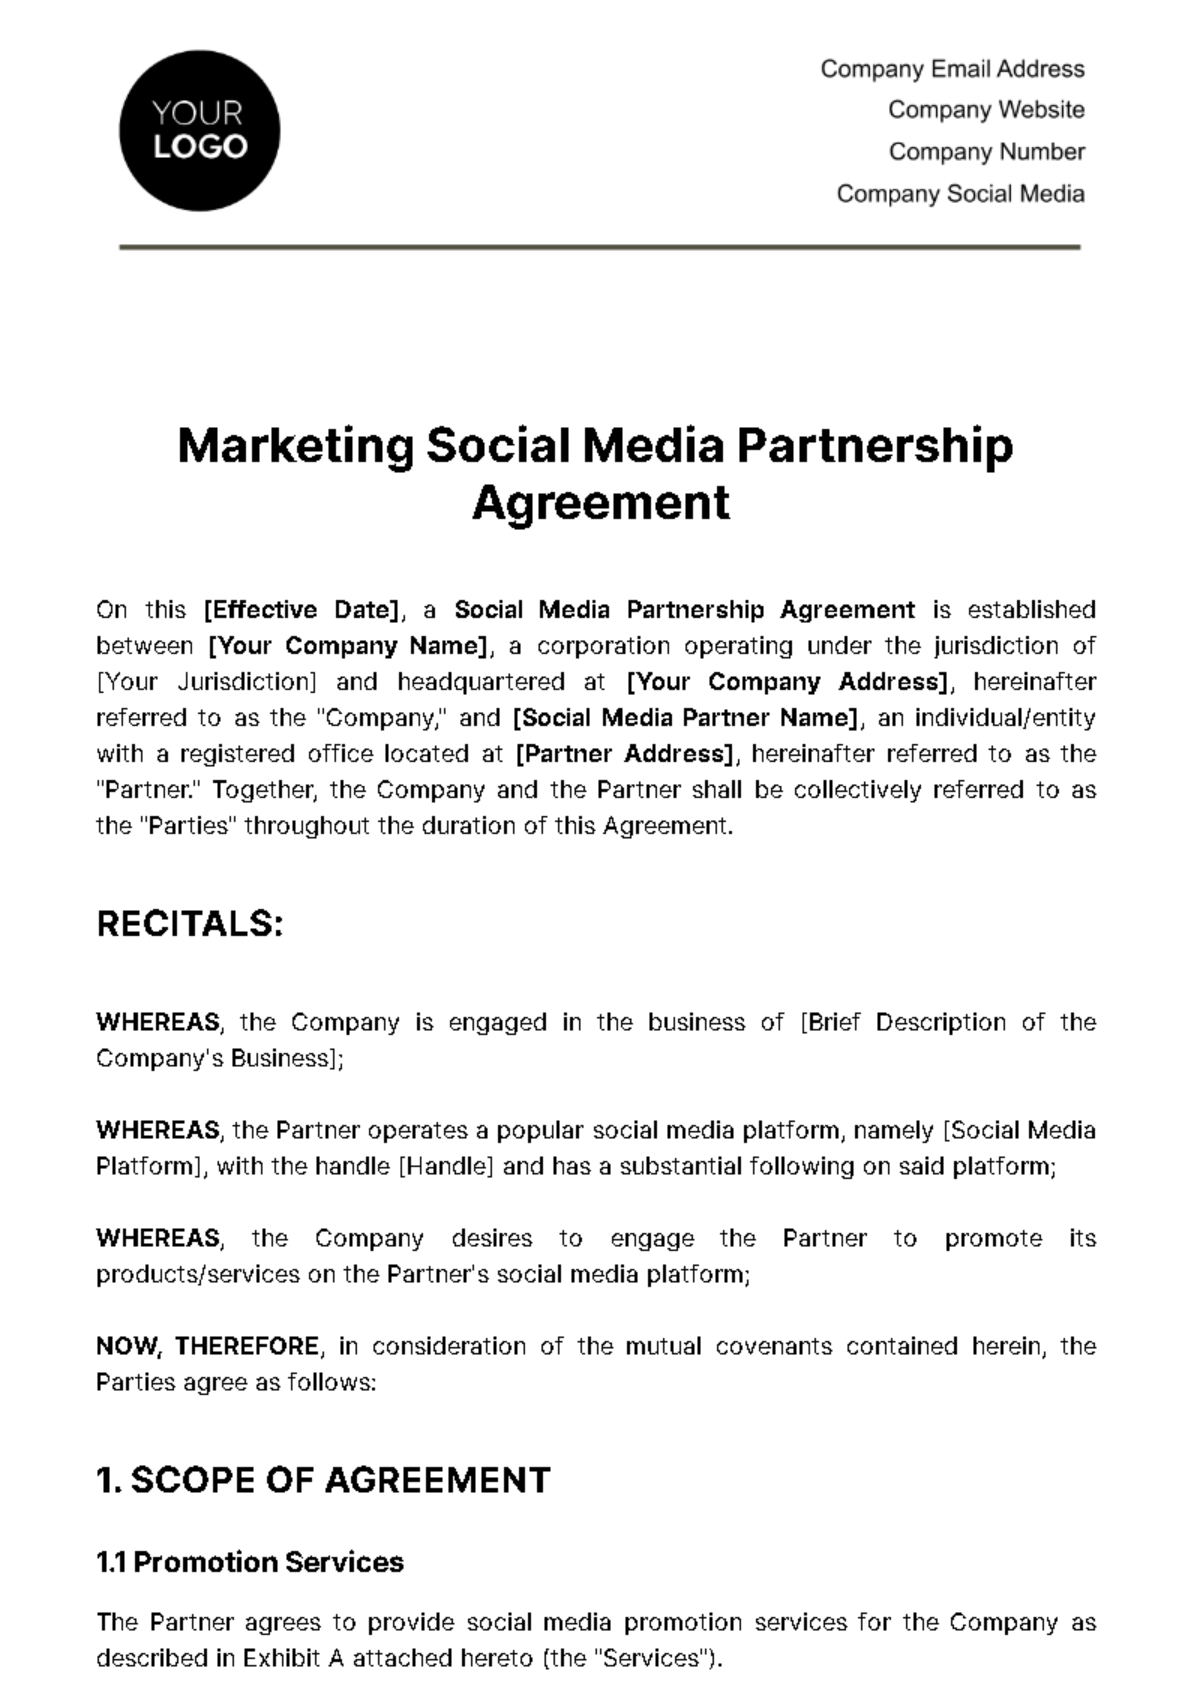 Free Marketing Social Media Partnership Agreement Template